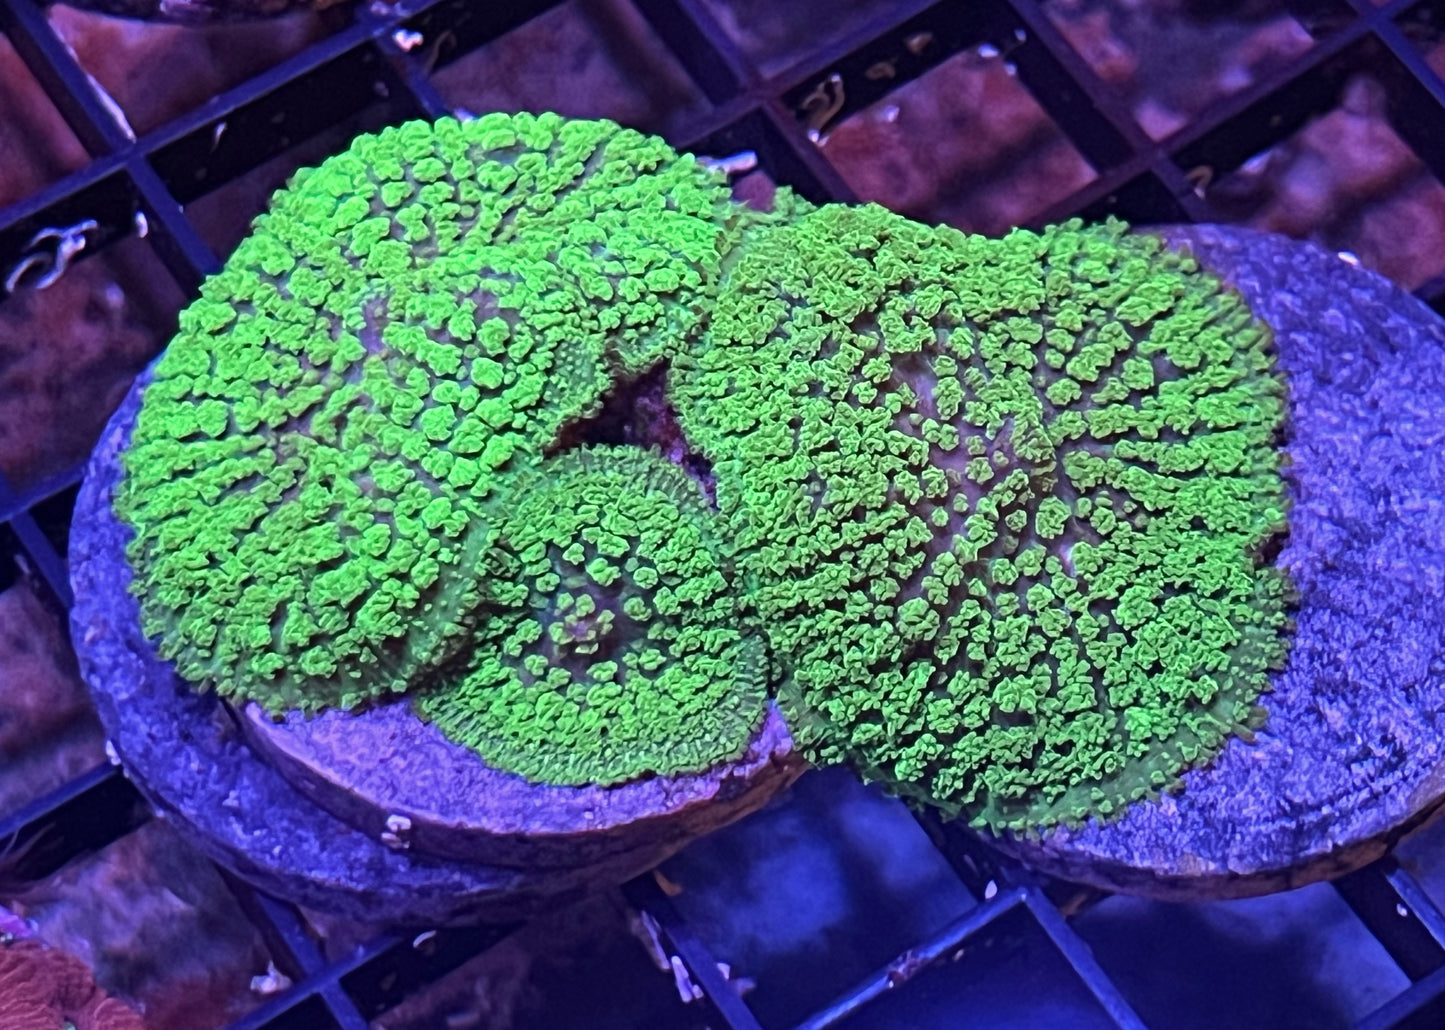 Neon Lights Mushrooms - 3 polyps